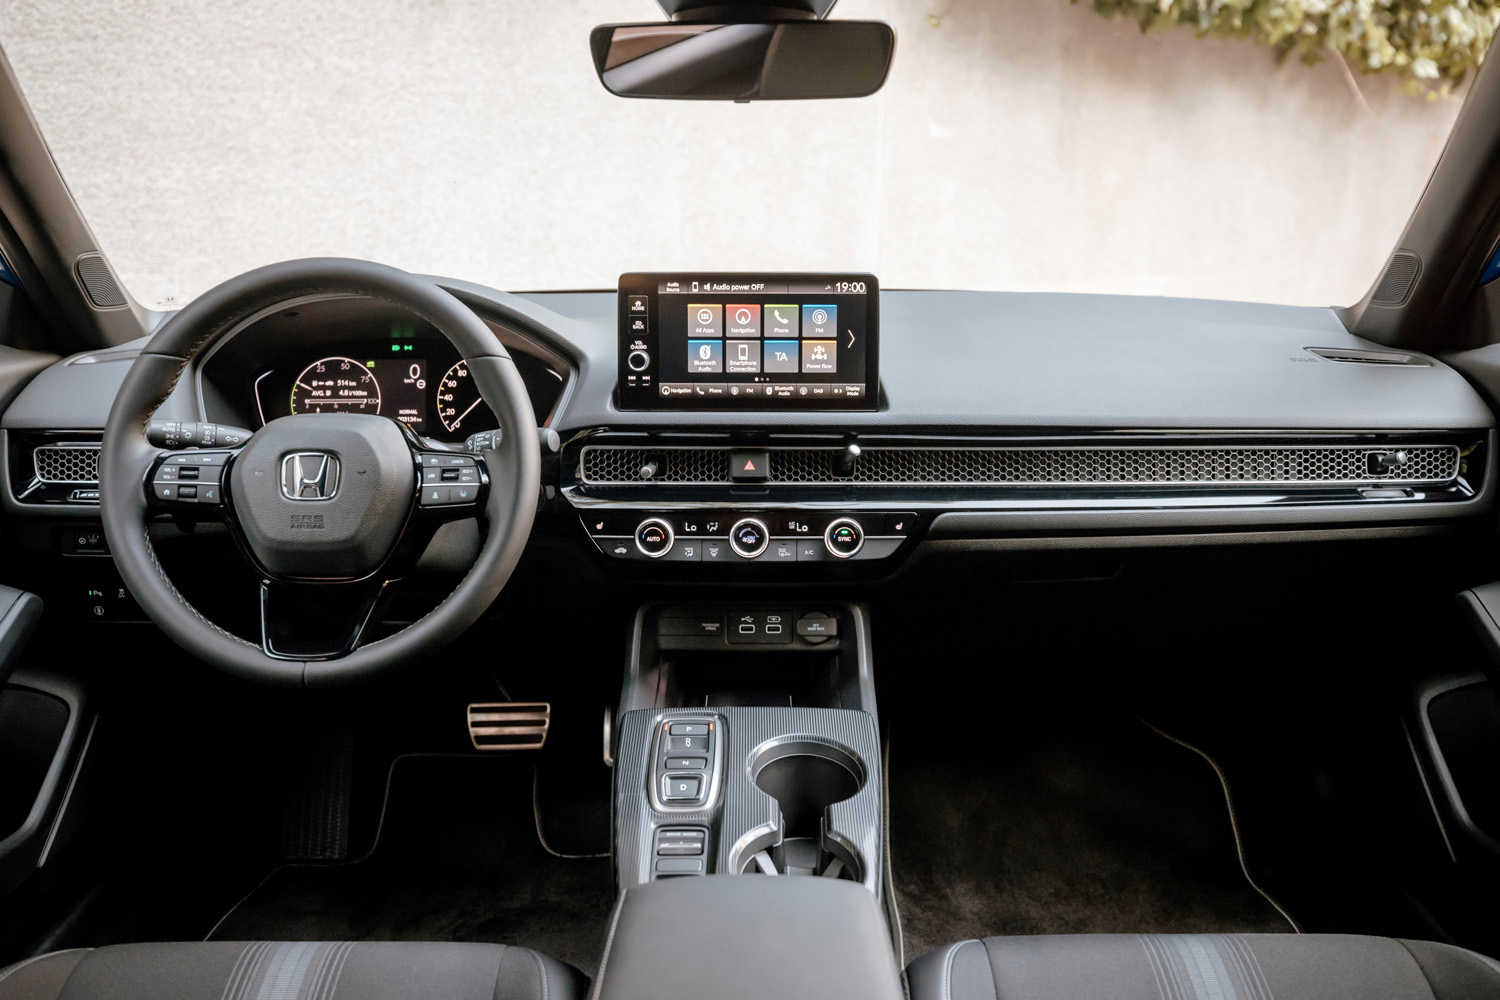 2022 Honda Civic e:HEV dashboard